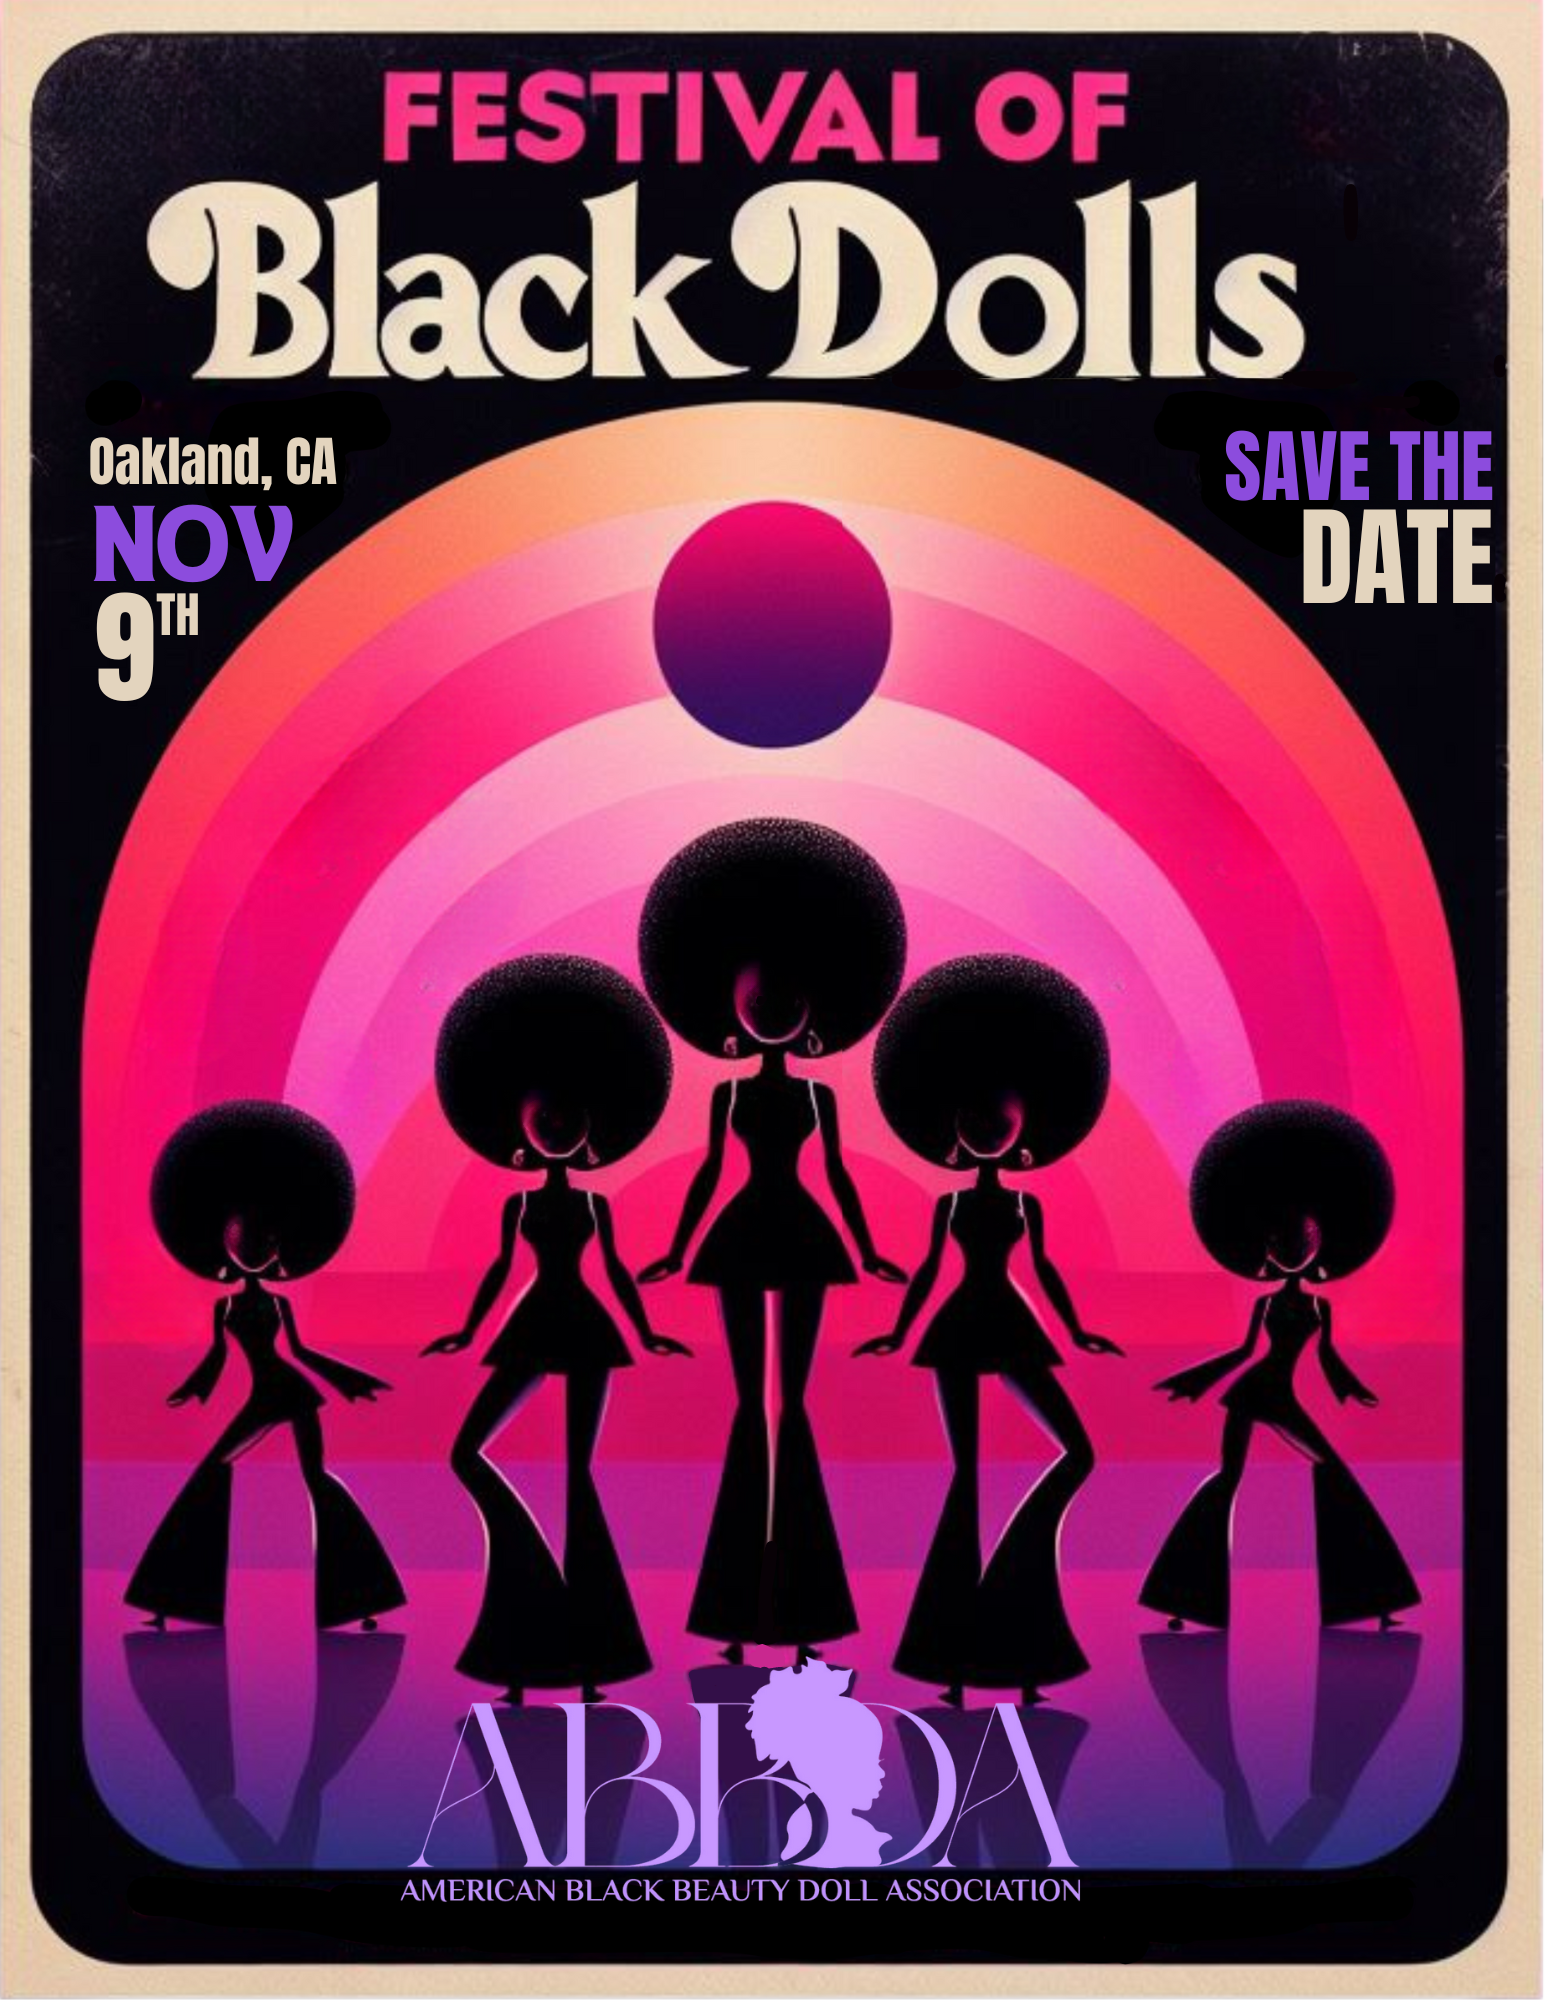 Festival of Black Dolls Soul Train theme